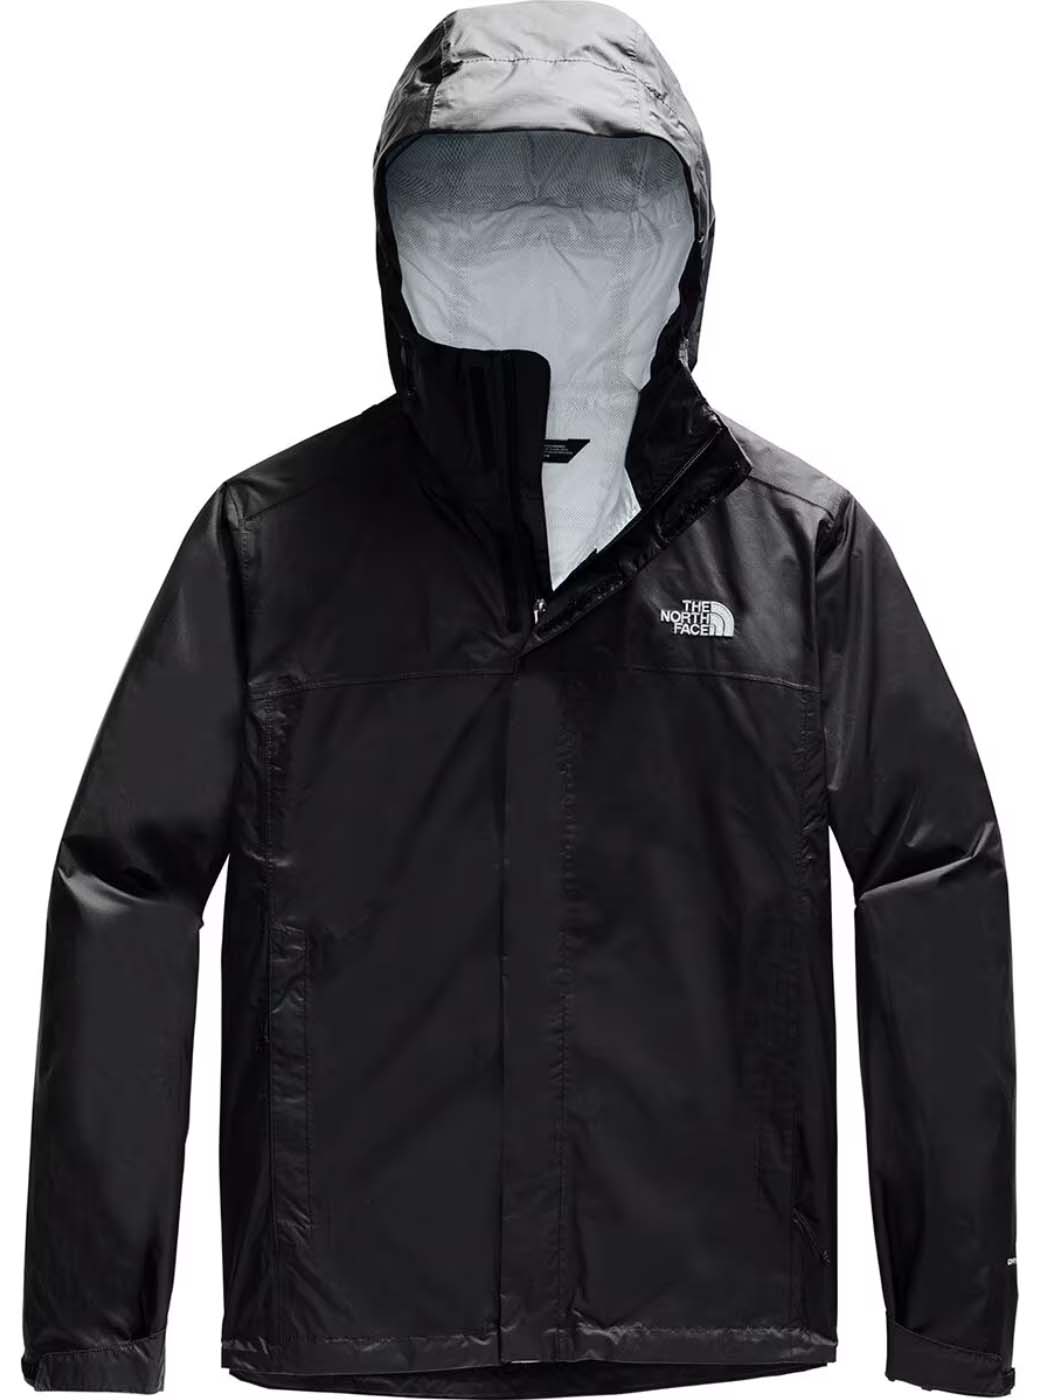 The North Face Venture 2 rain jacket